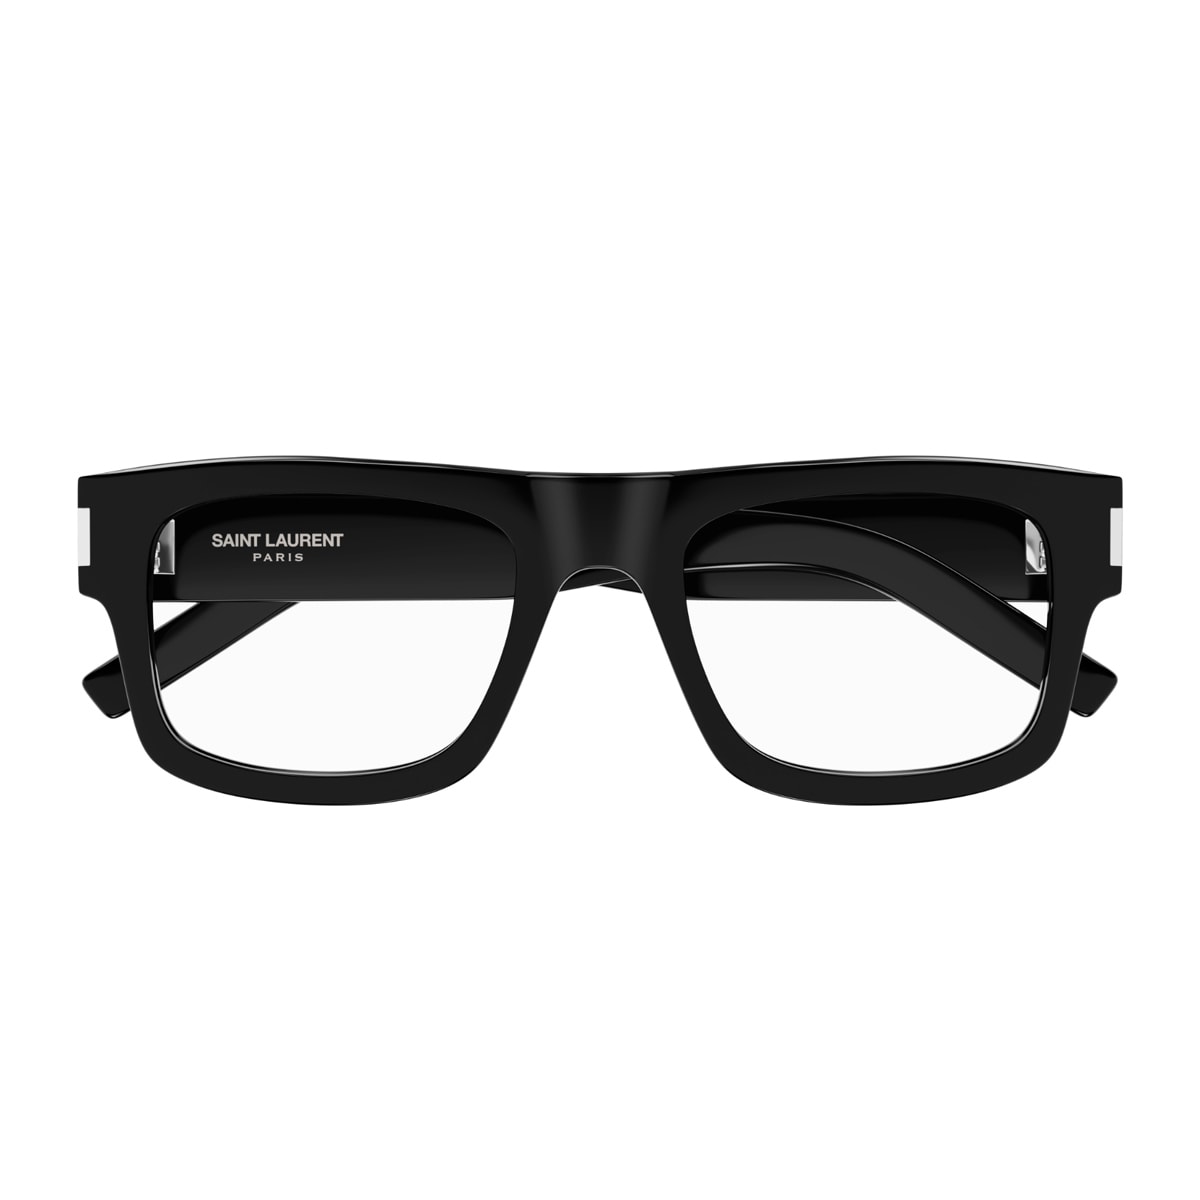 Saint Laurent Eyewear Large Square Framed Sunglasses